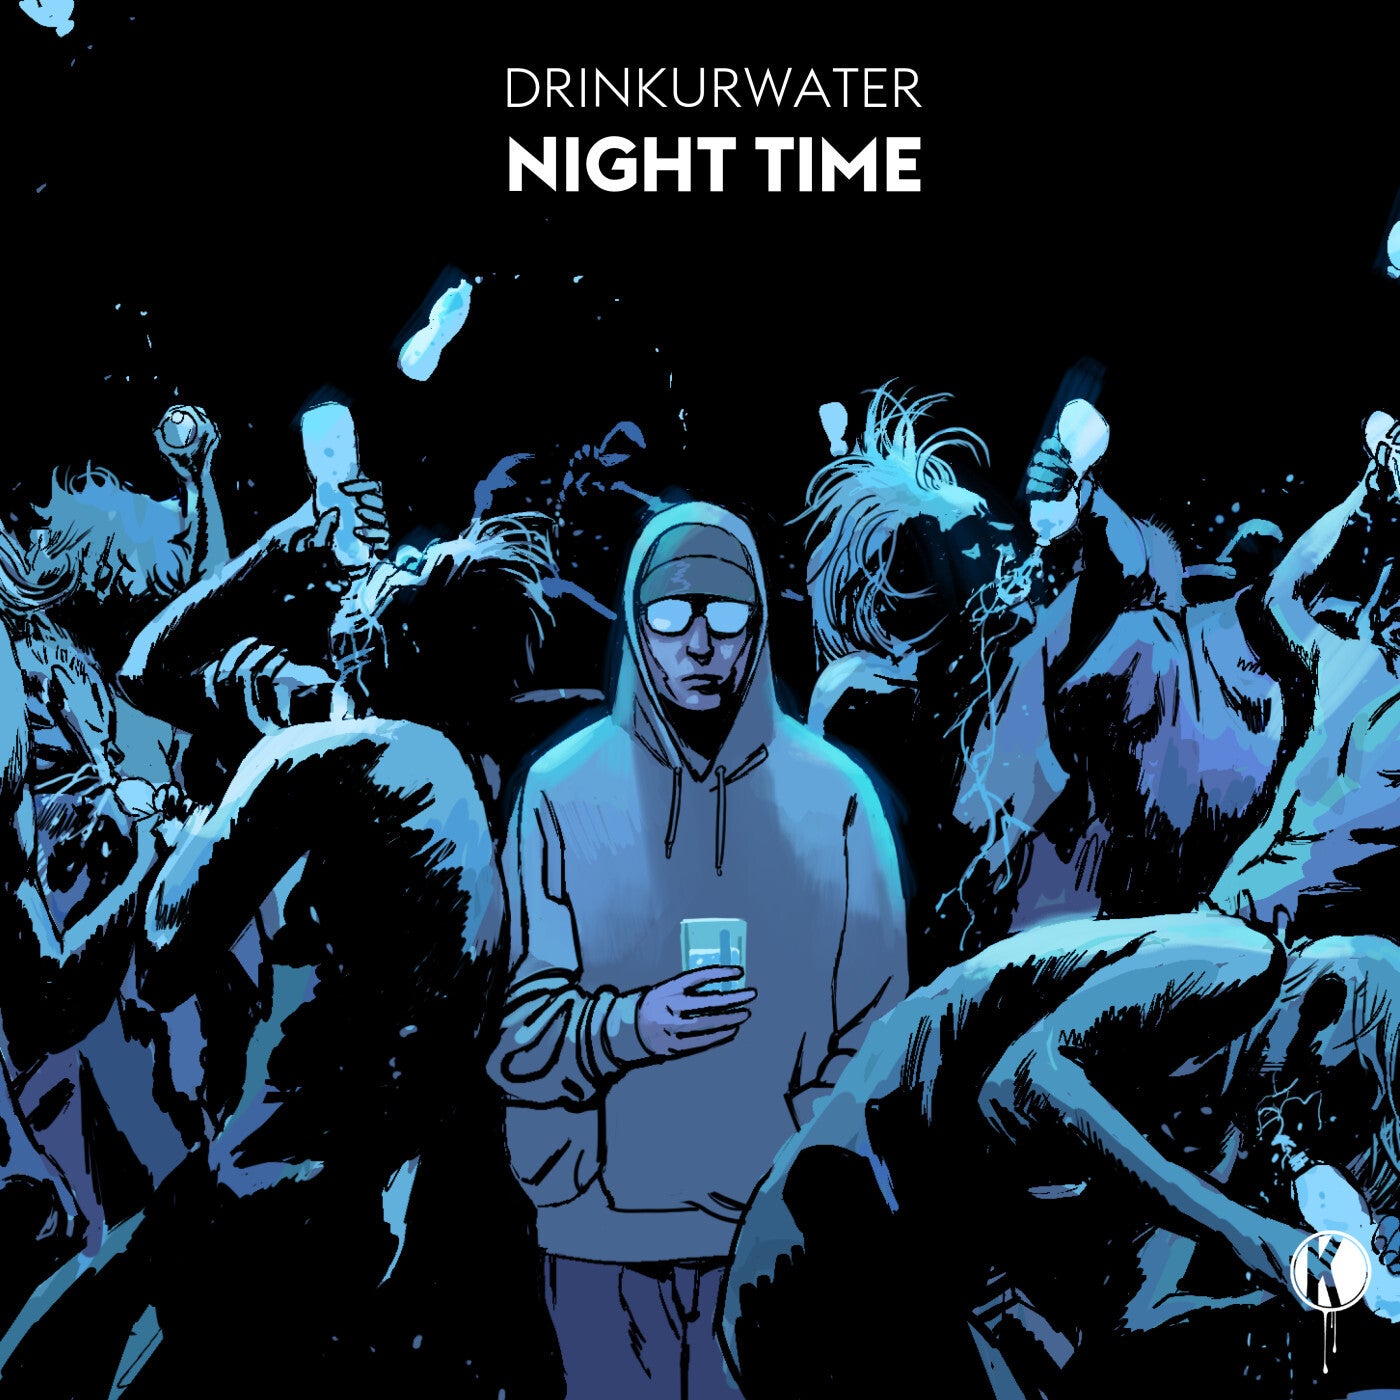 Night Time EP